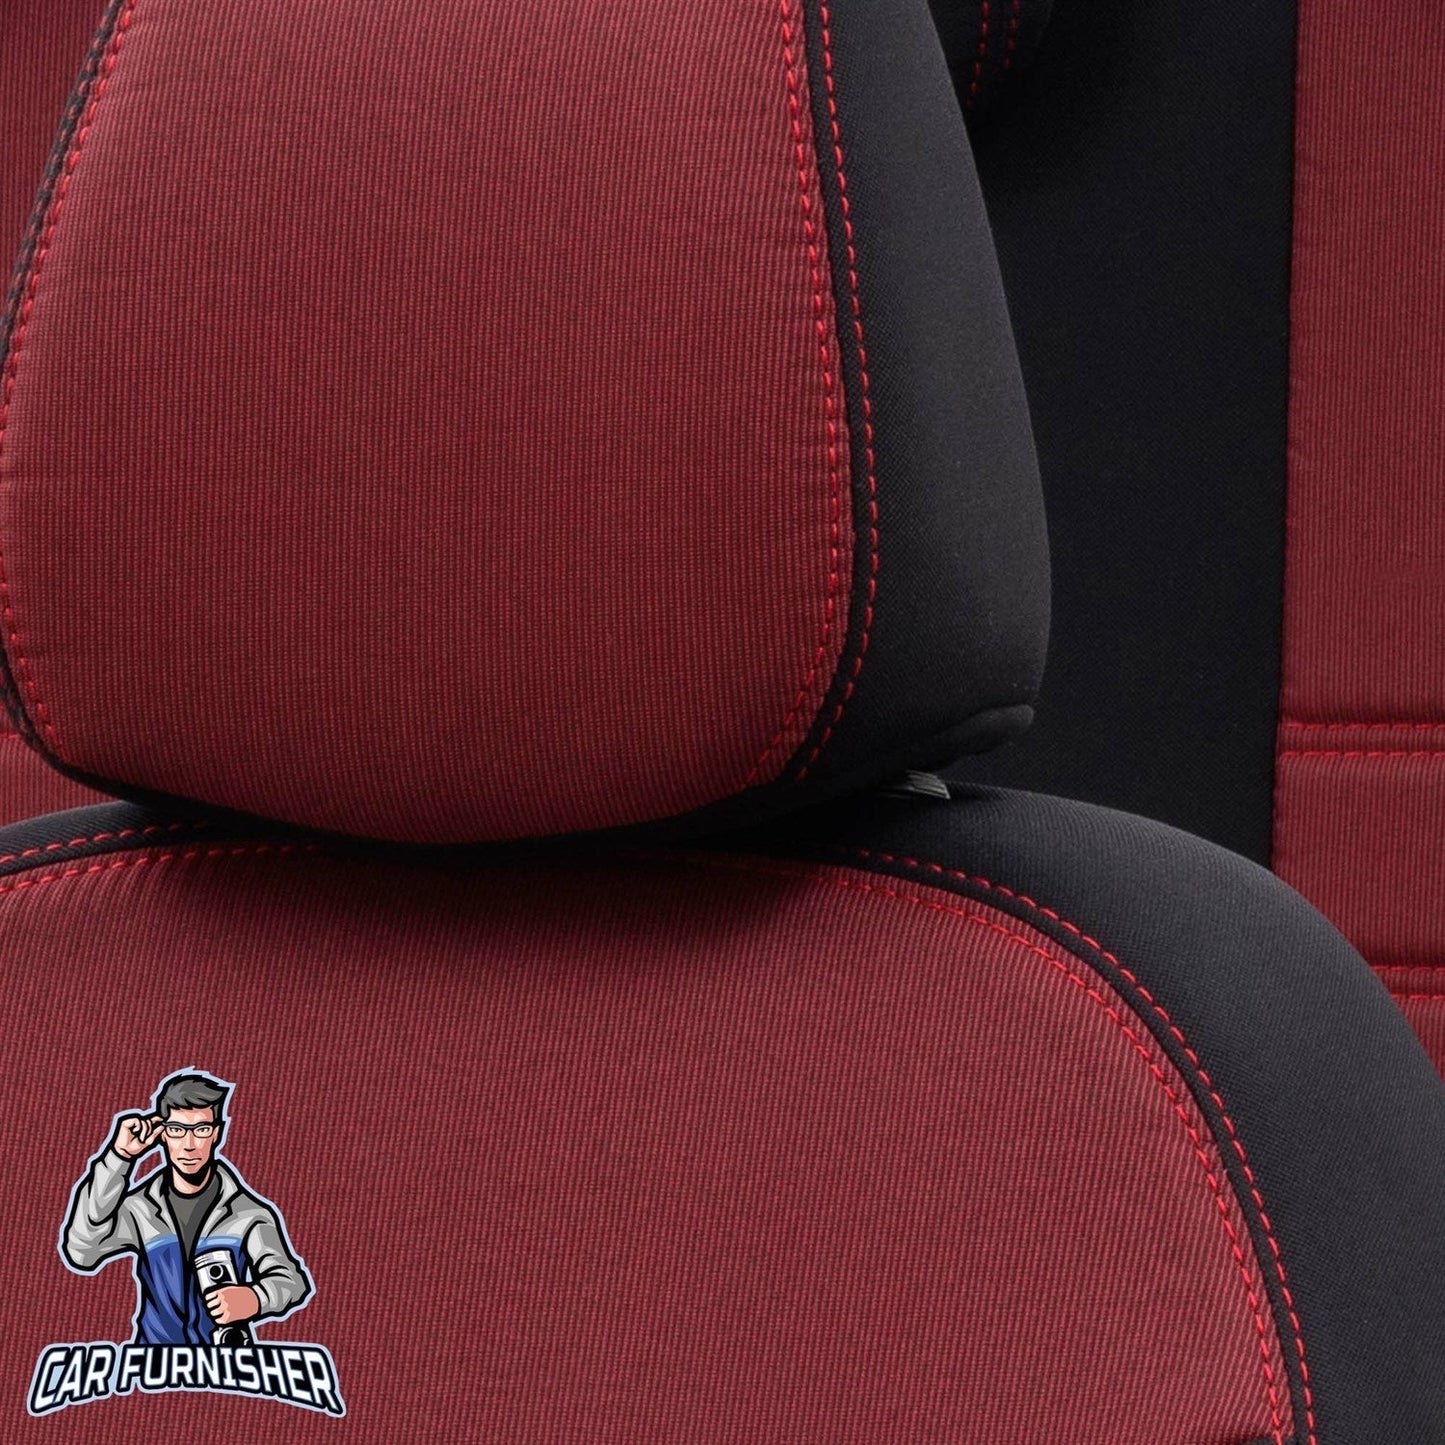 Renault Fluence Seat Covers Original Jacquard Design Red Jacquard Fabric